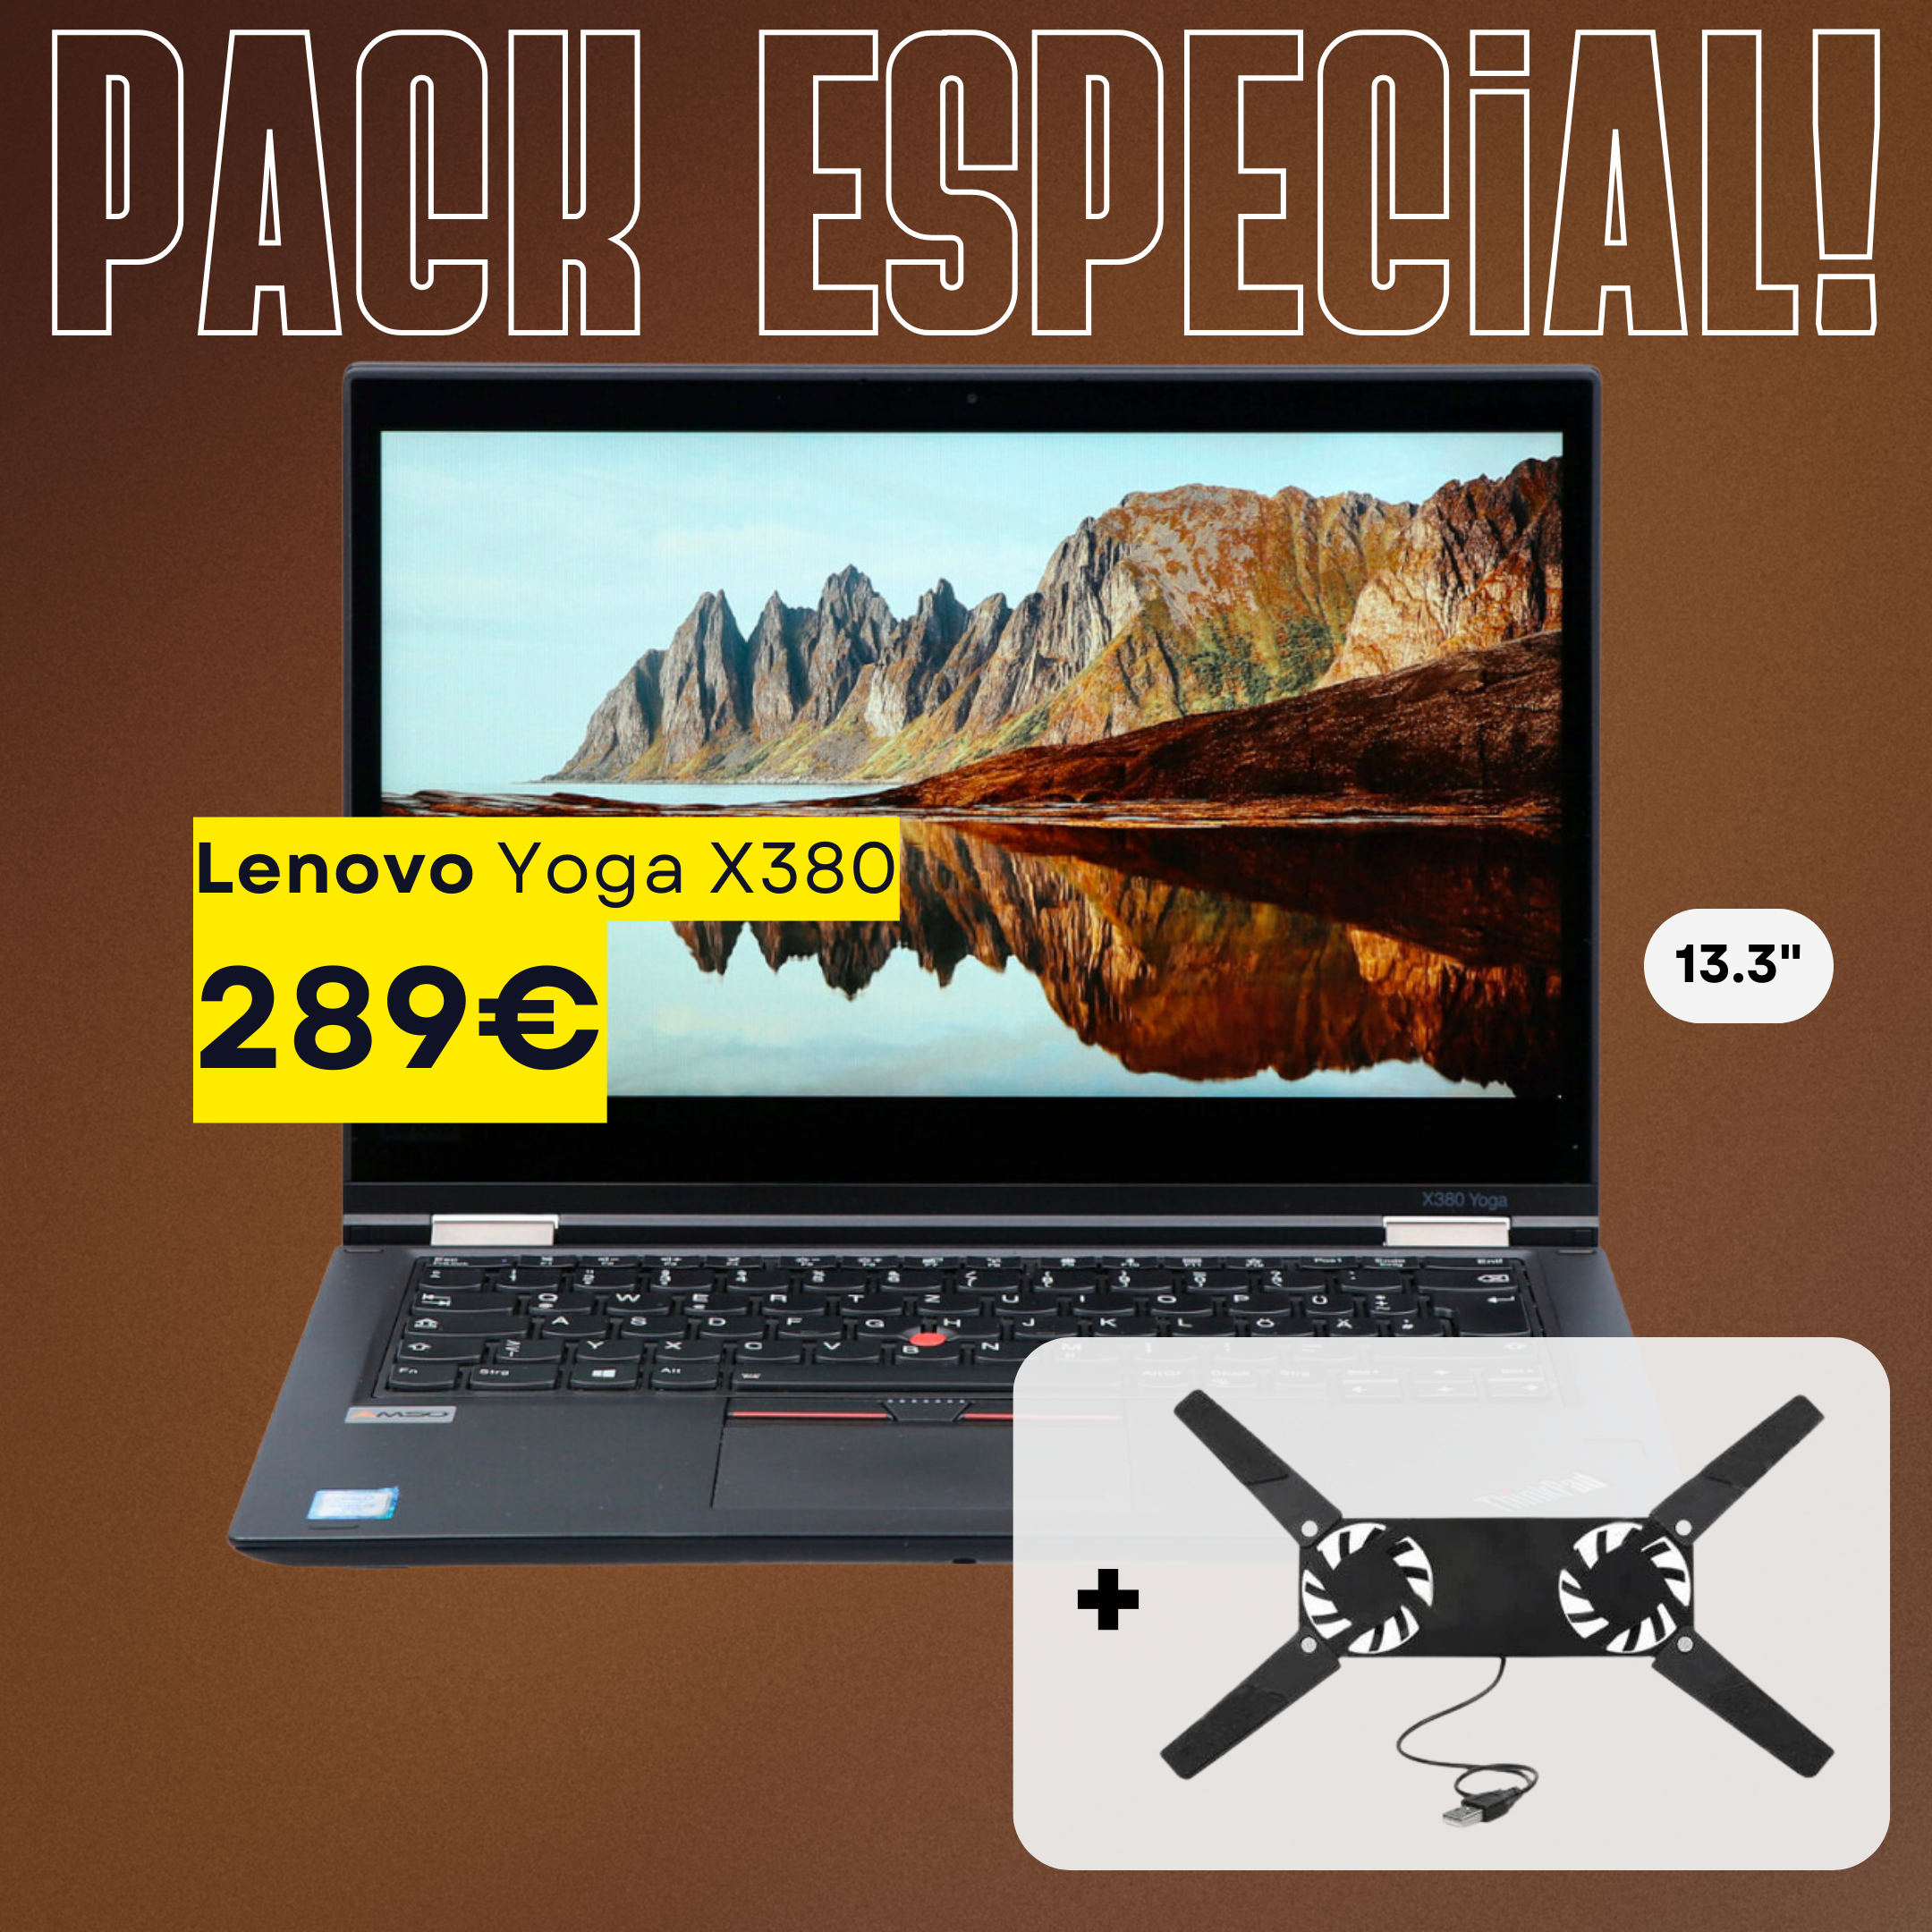 Pack Especial: Lenovo Yoga X380 i5 (8th Gen) 8GB RAM 256GB SSD 13.3